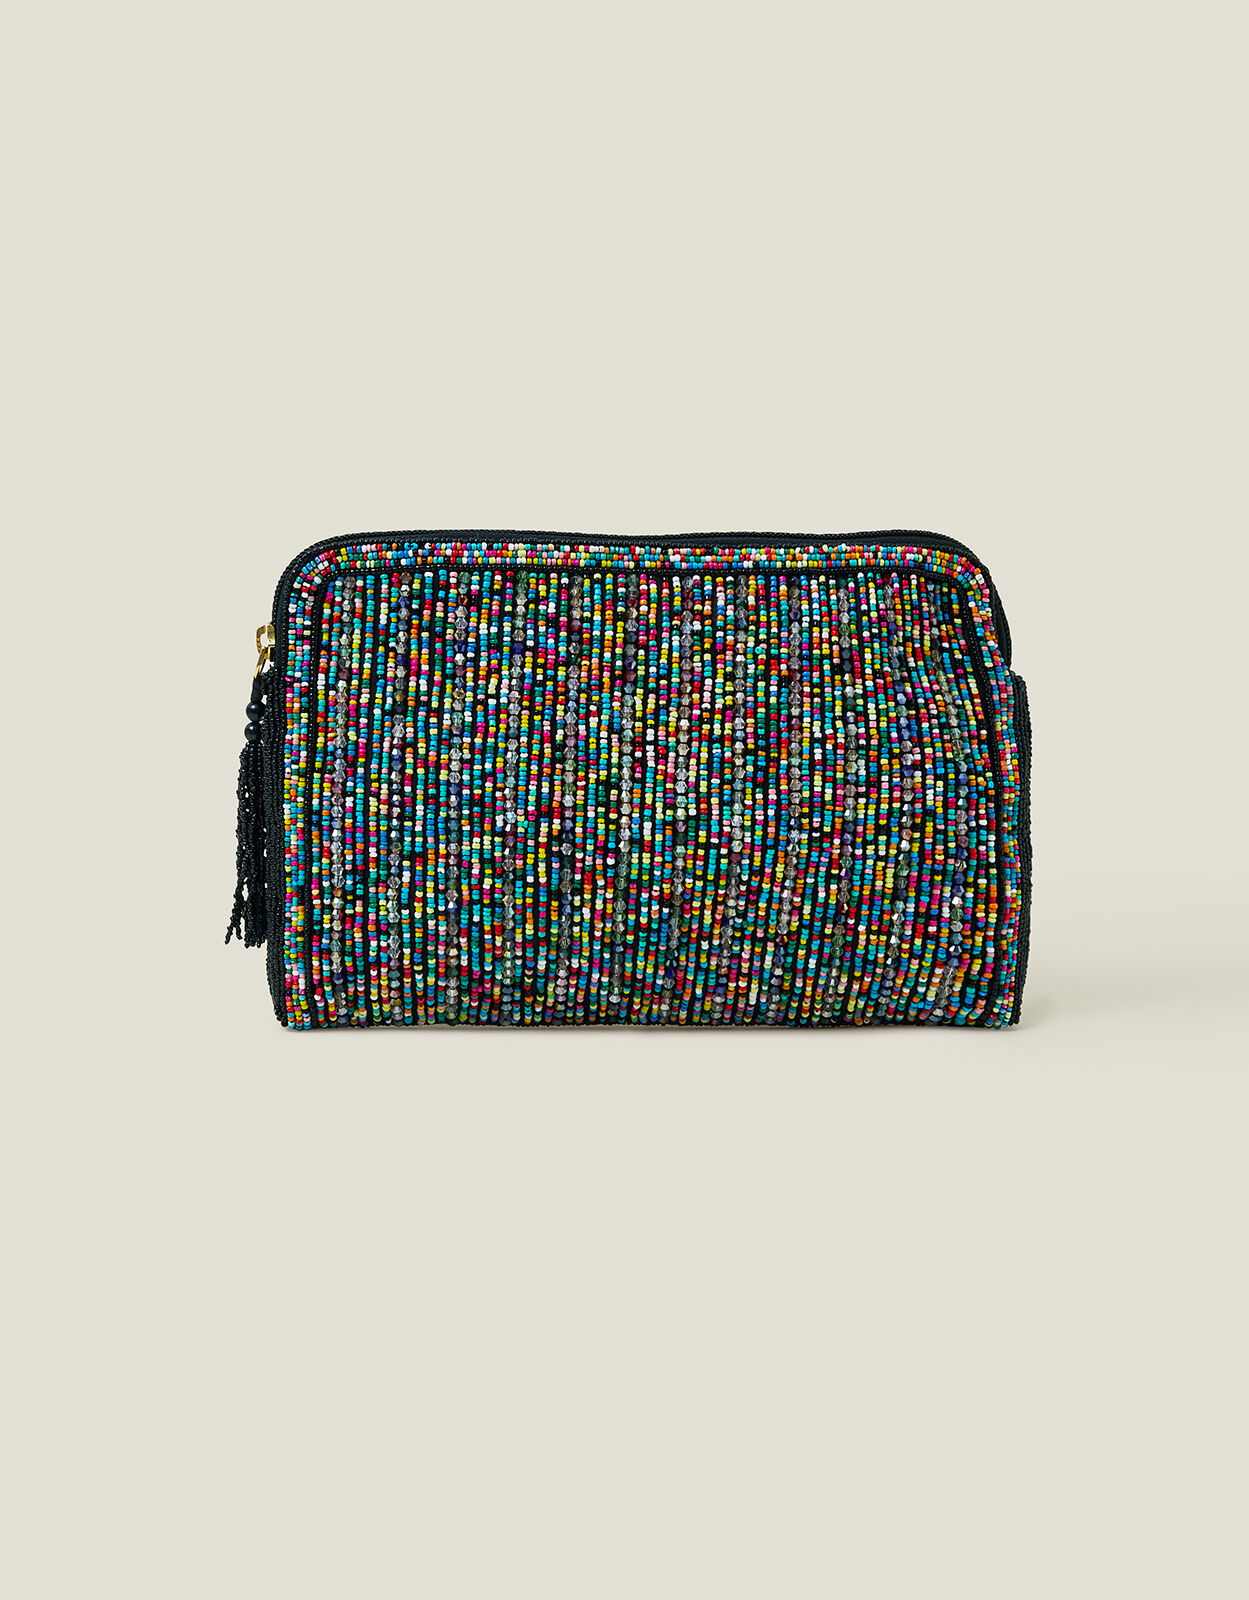 Neon Multi Colour Grain Finish Italian Leather Gladstone Style Handbag  Shoulder Bag Limited Edition by Handbag Bliss! (Neon Pi… | Bags, Purses and  handbags, Handbag